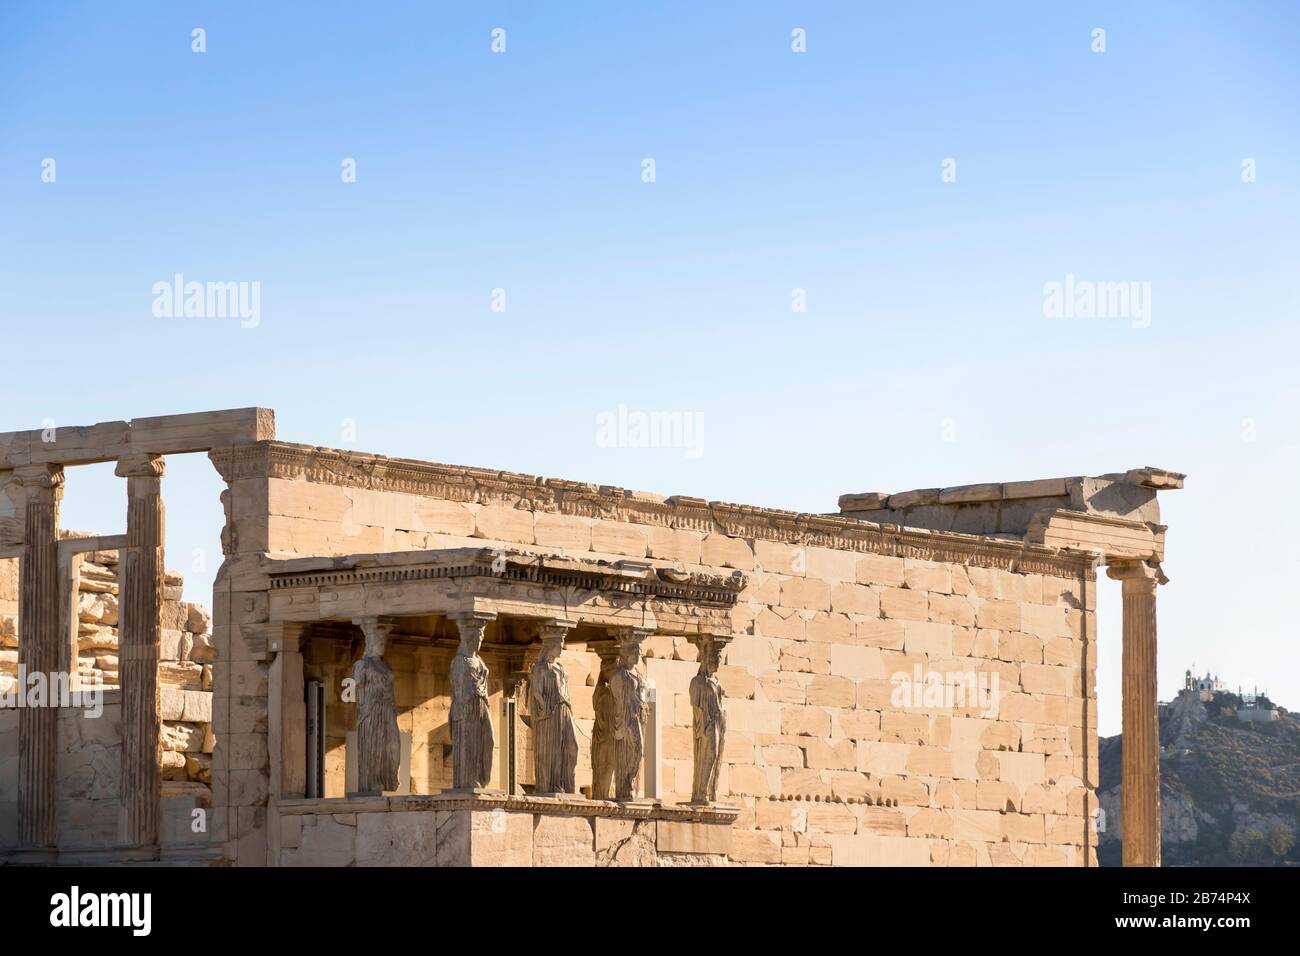 Blick auf die Akropolis. Berühmter Ort in Athen - Hauptstadt Griechenlands. Antike Denkmäler. Stockfoto